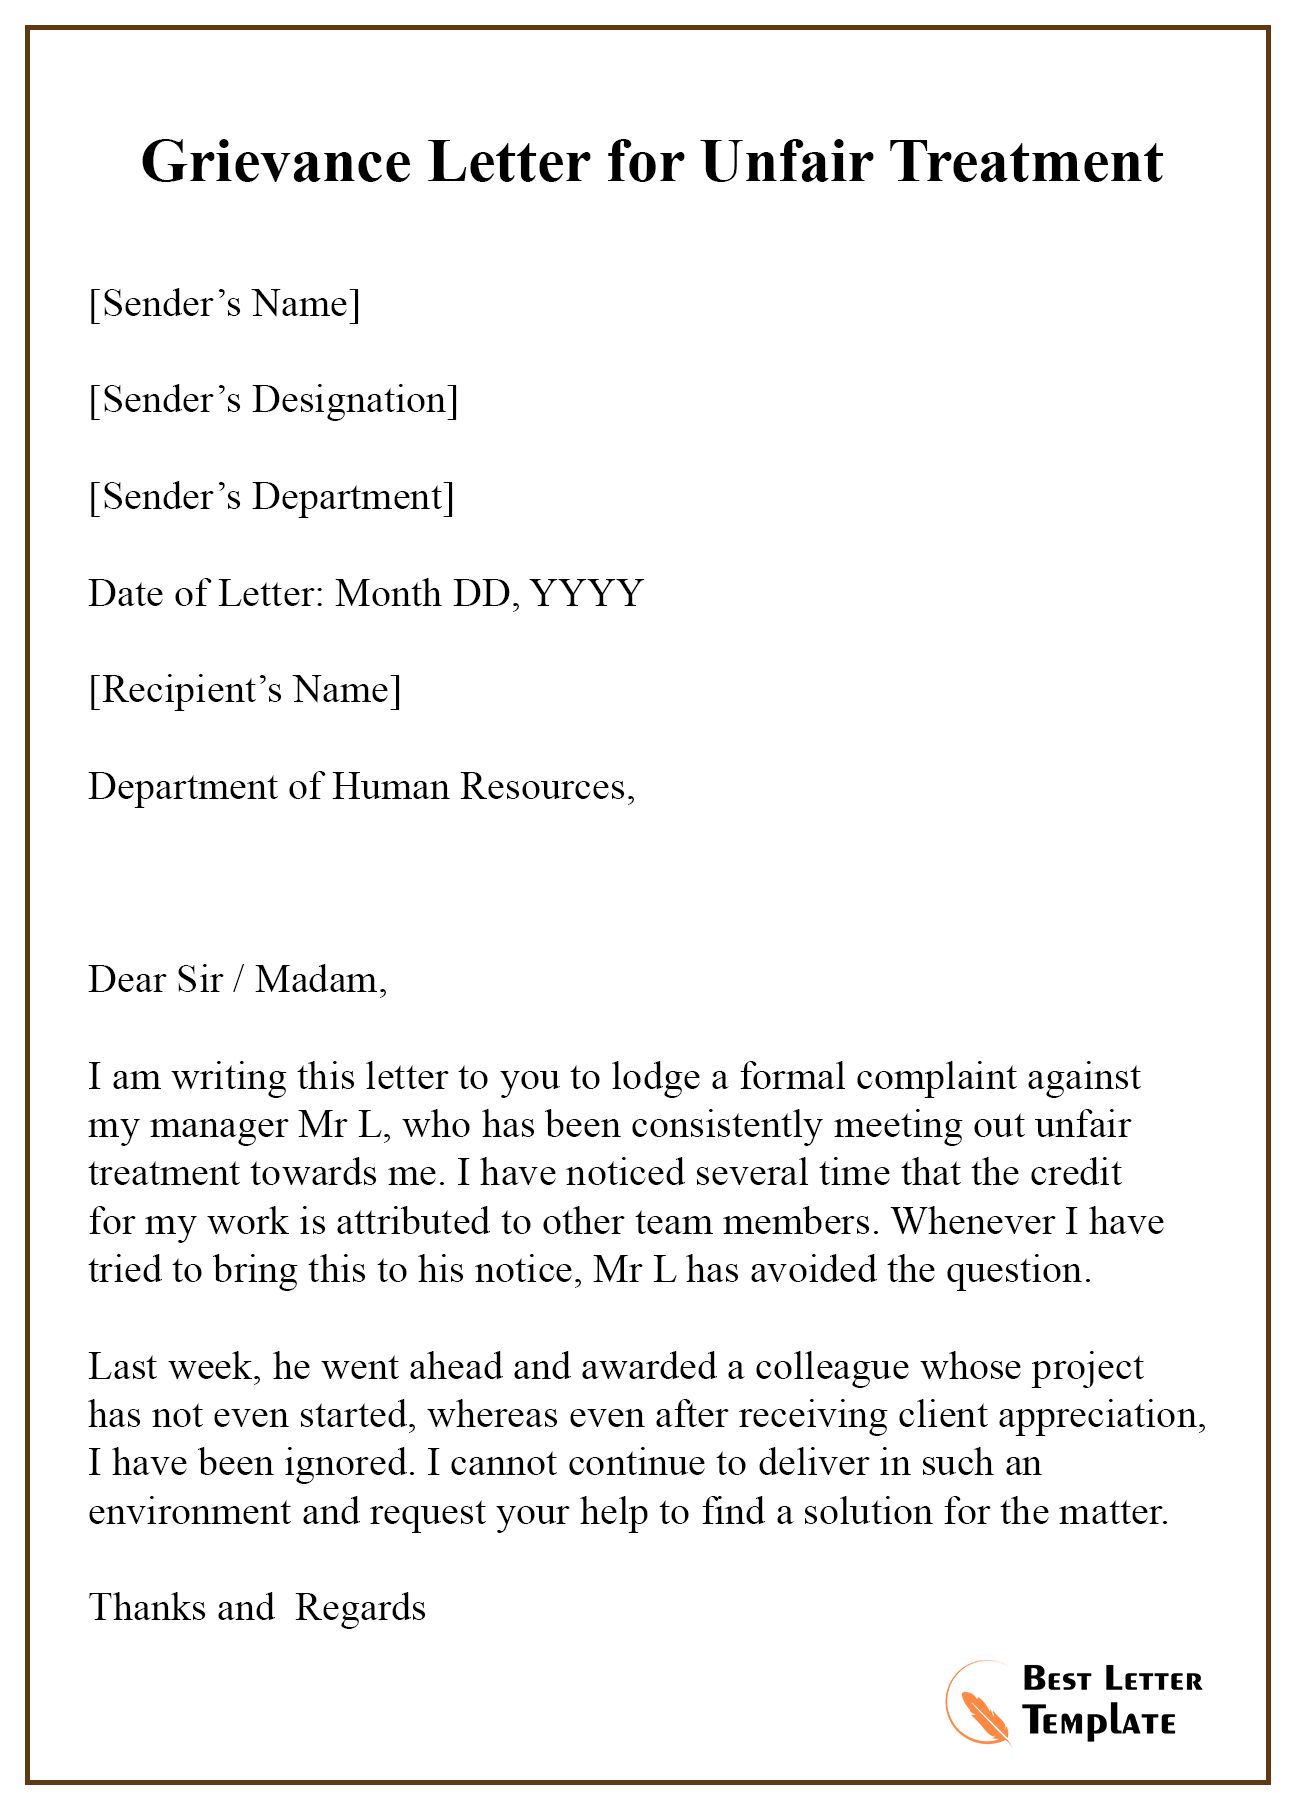 Resignation Letter Due To Unfair Treatment from bestlettertemplate.com